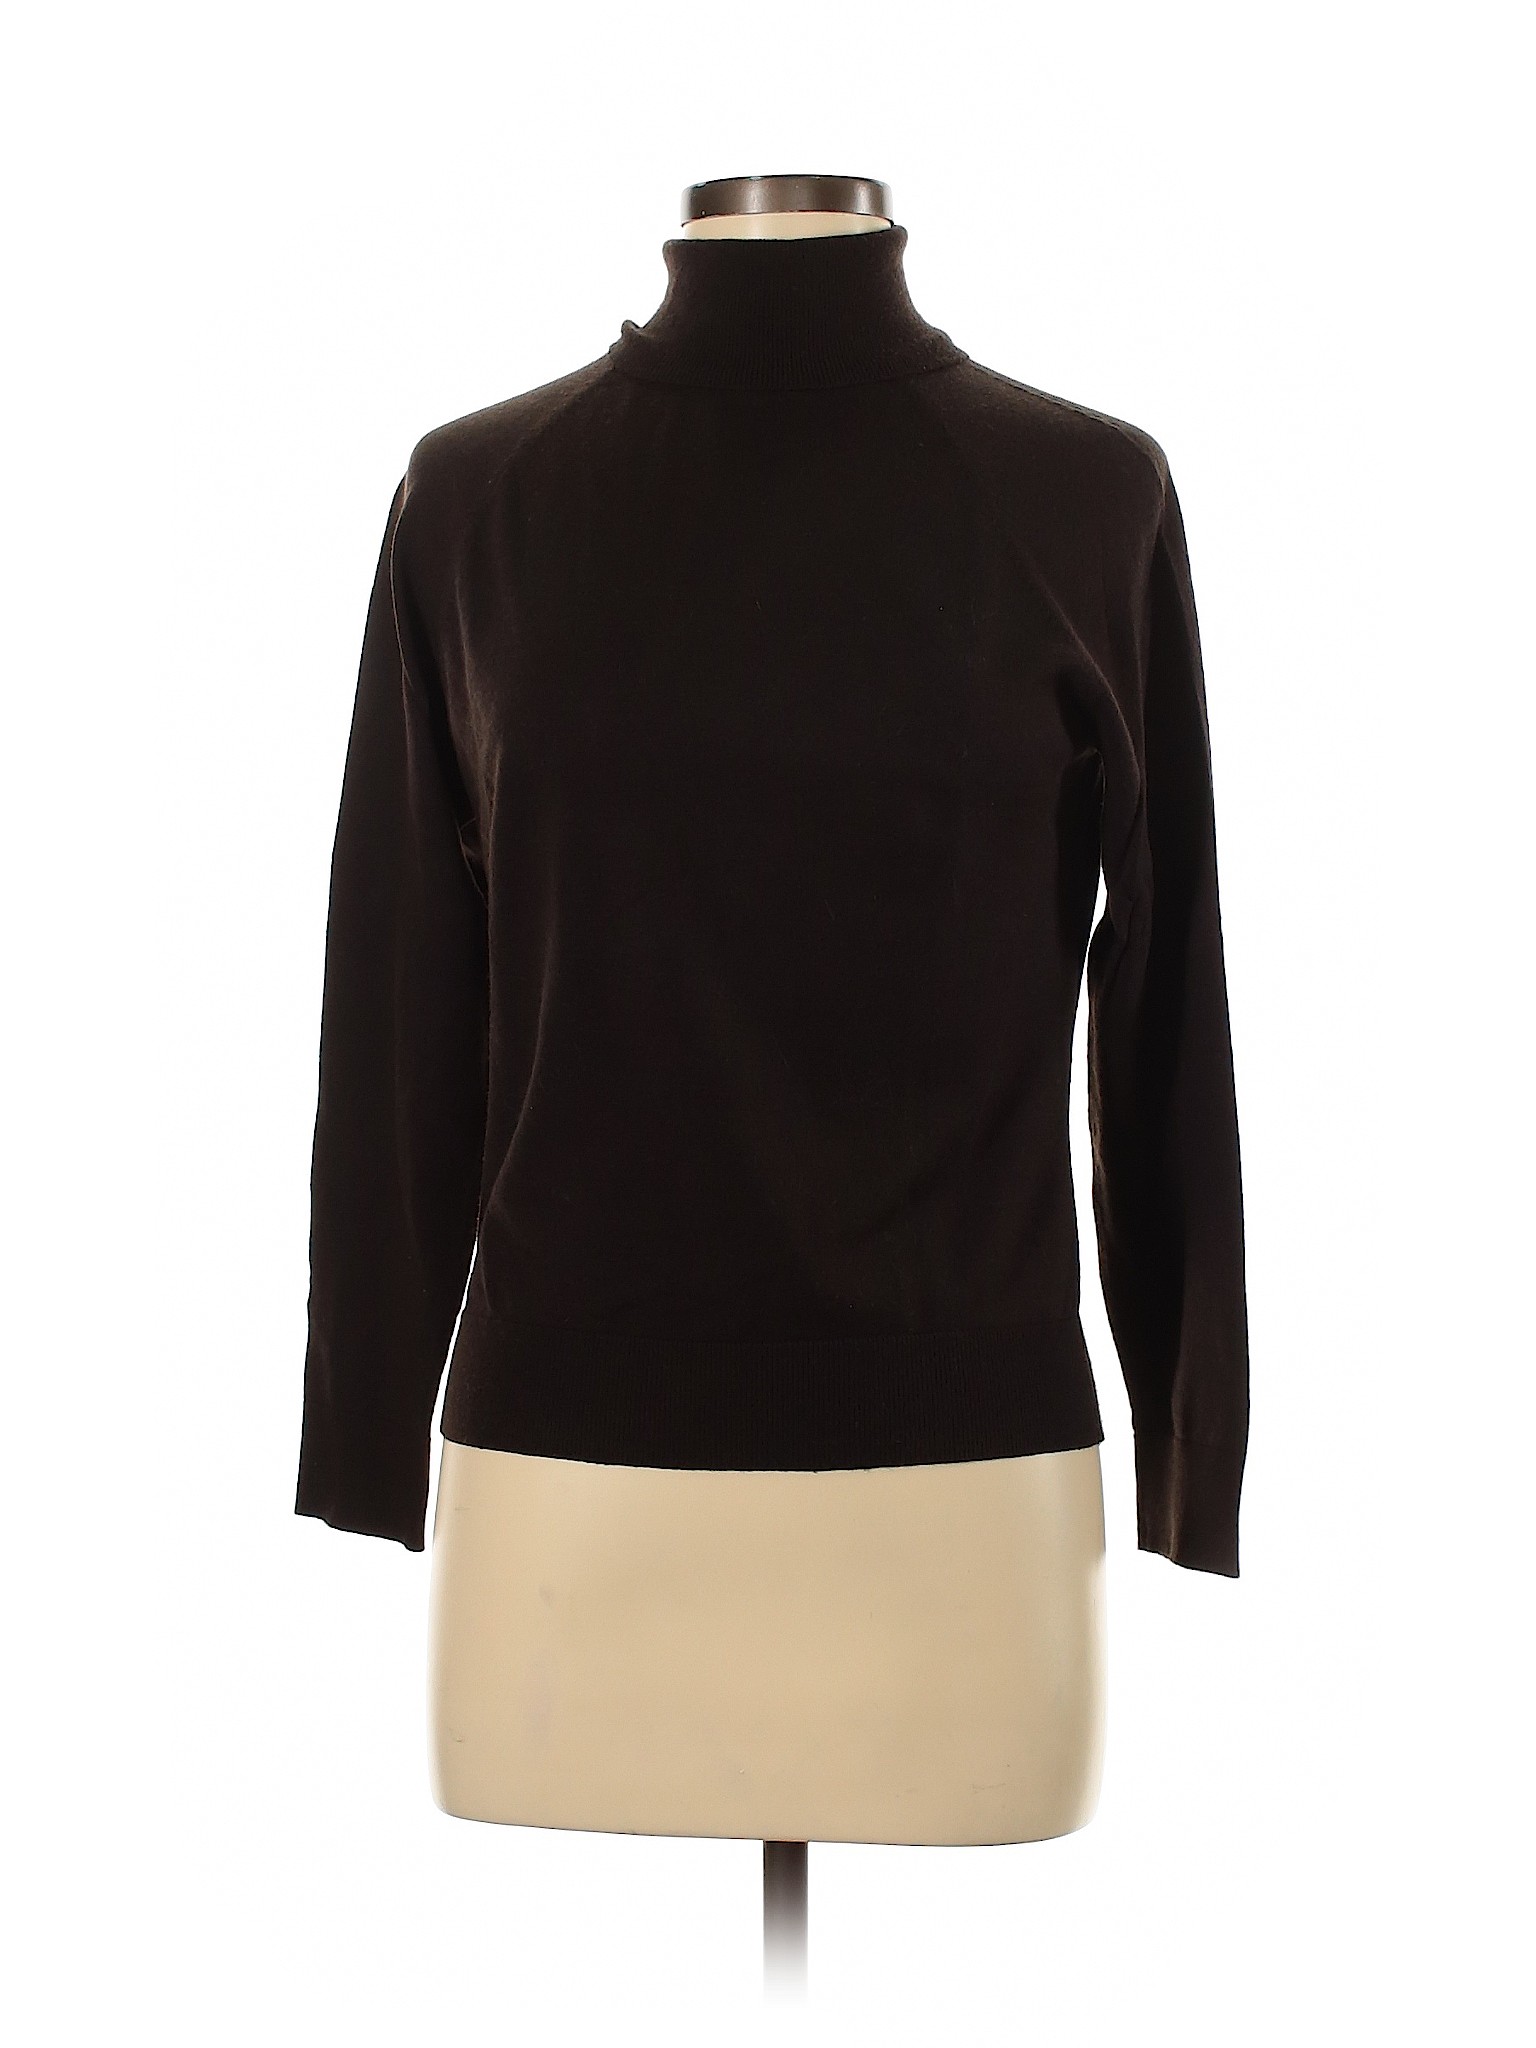 Talbots Women Black Turtleneck Sweater M | eBay